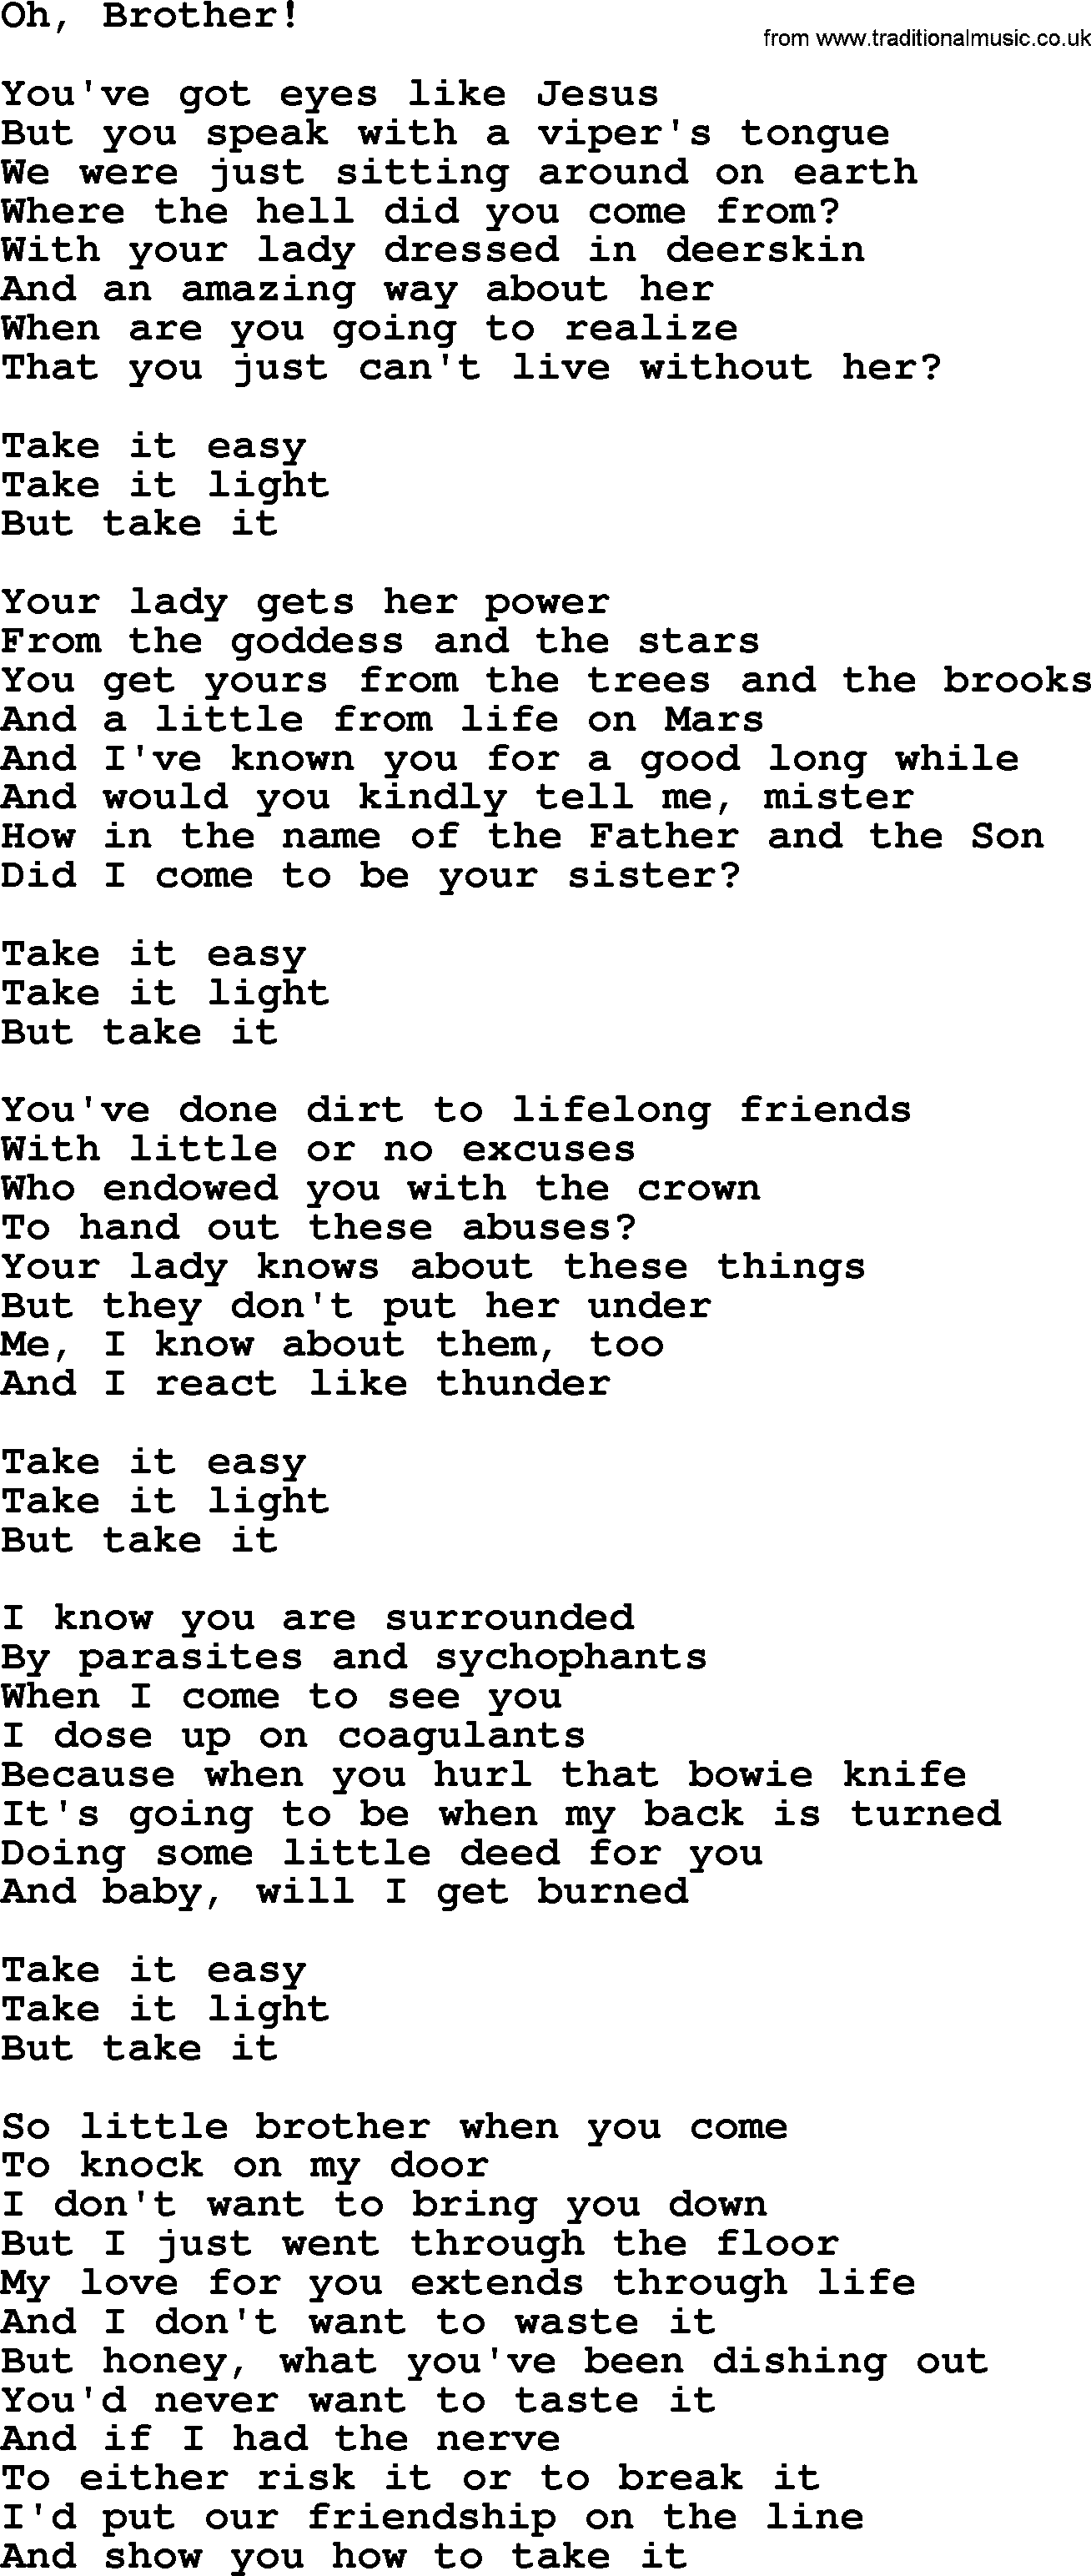 Joan Baez song Oh, Brother!, lyrics